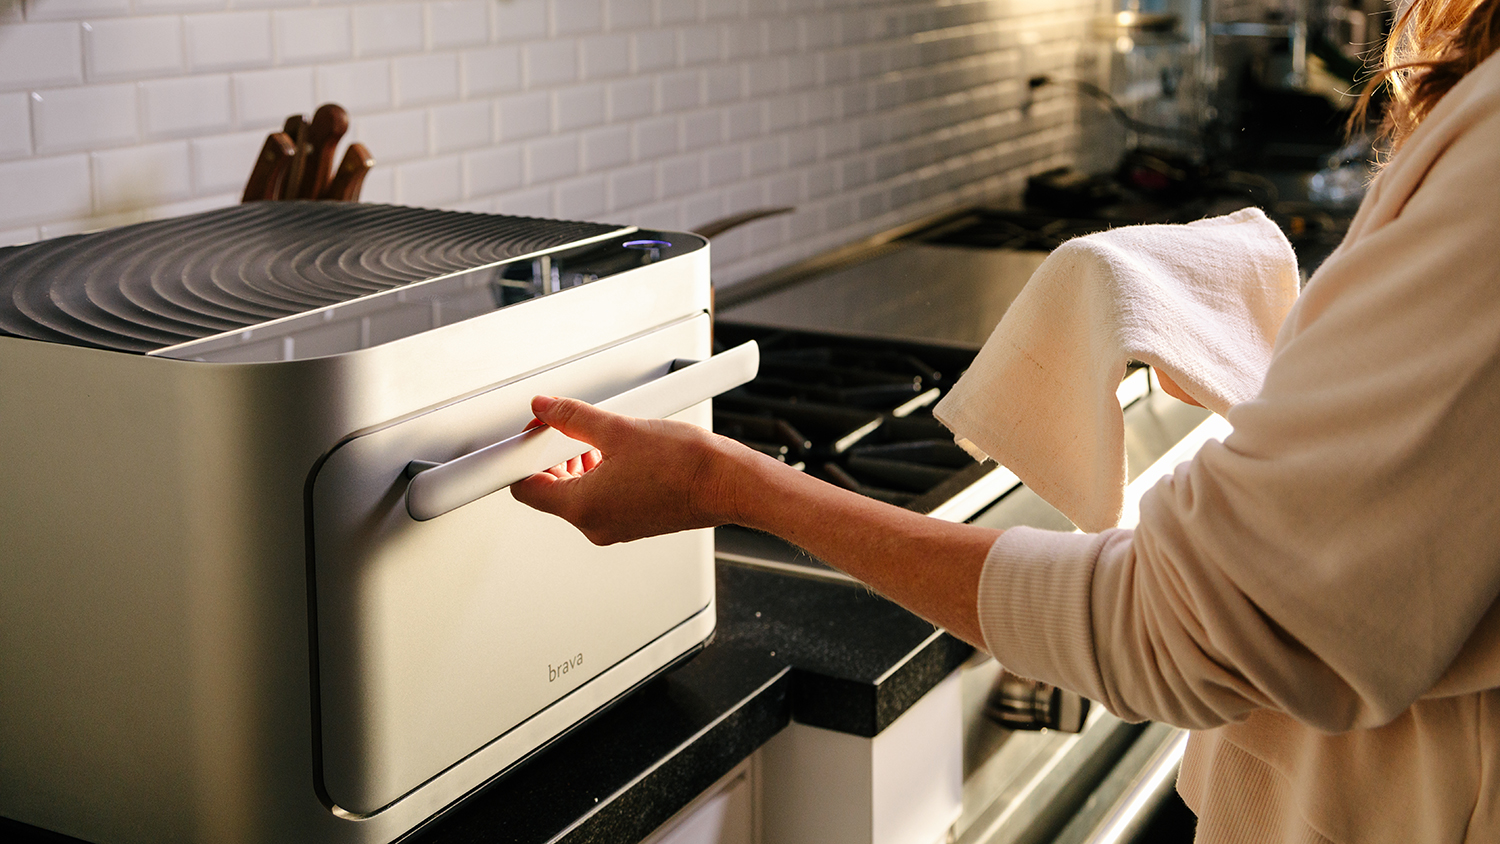 GE announces new countertop appliances - Reviewed